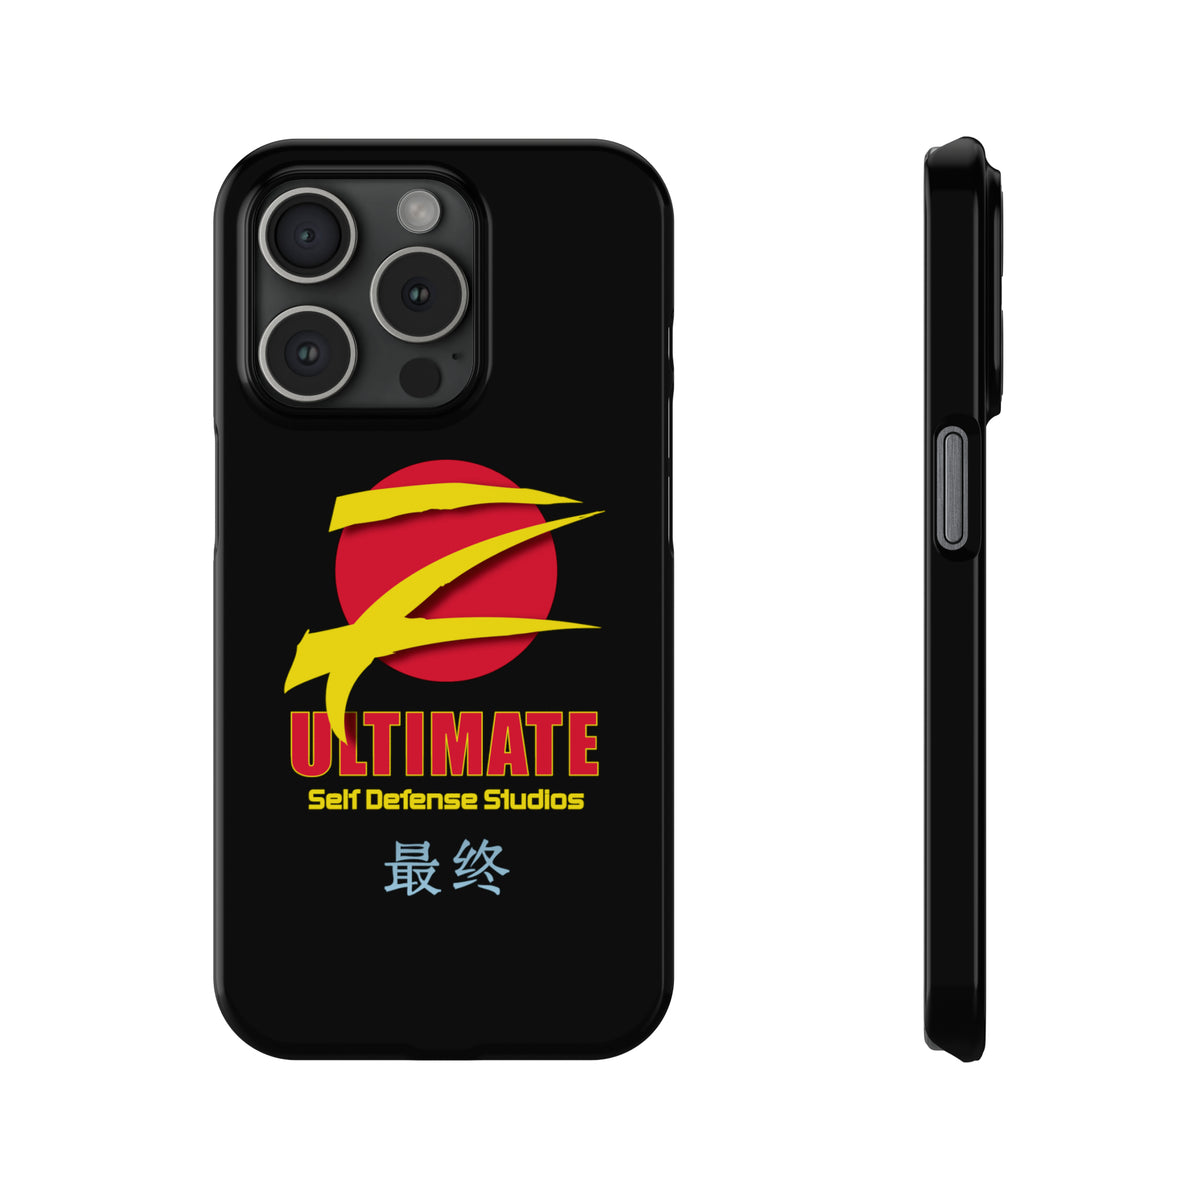 Z-Ultimate &quot;Slim&quot; iPhone Cases